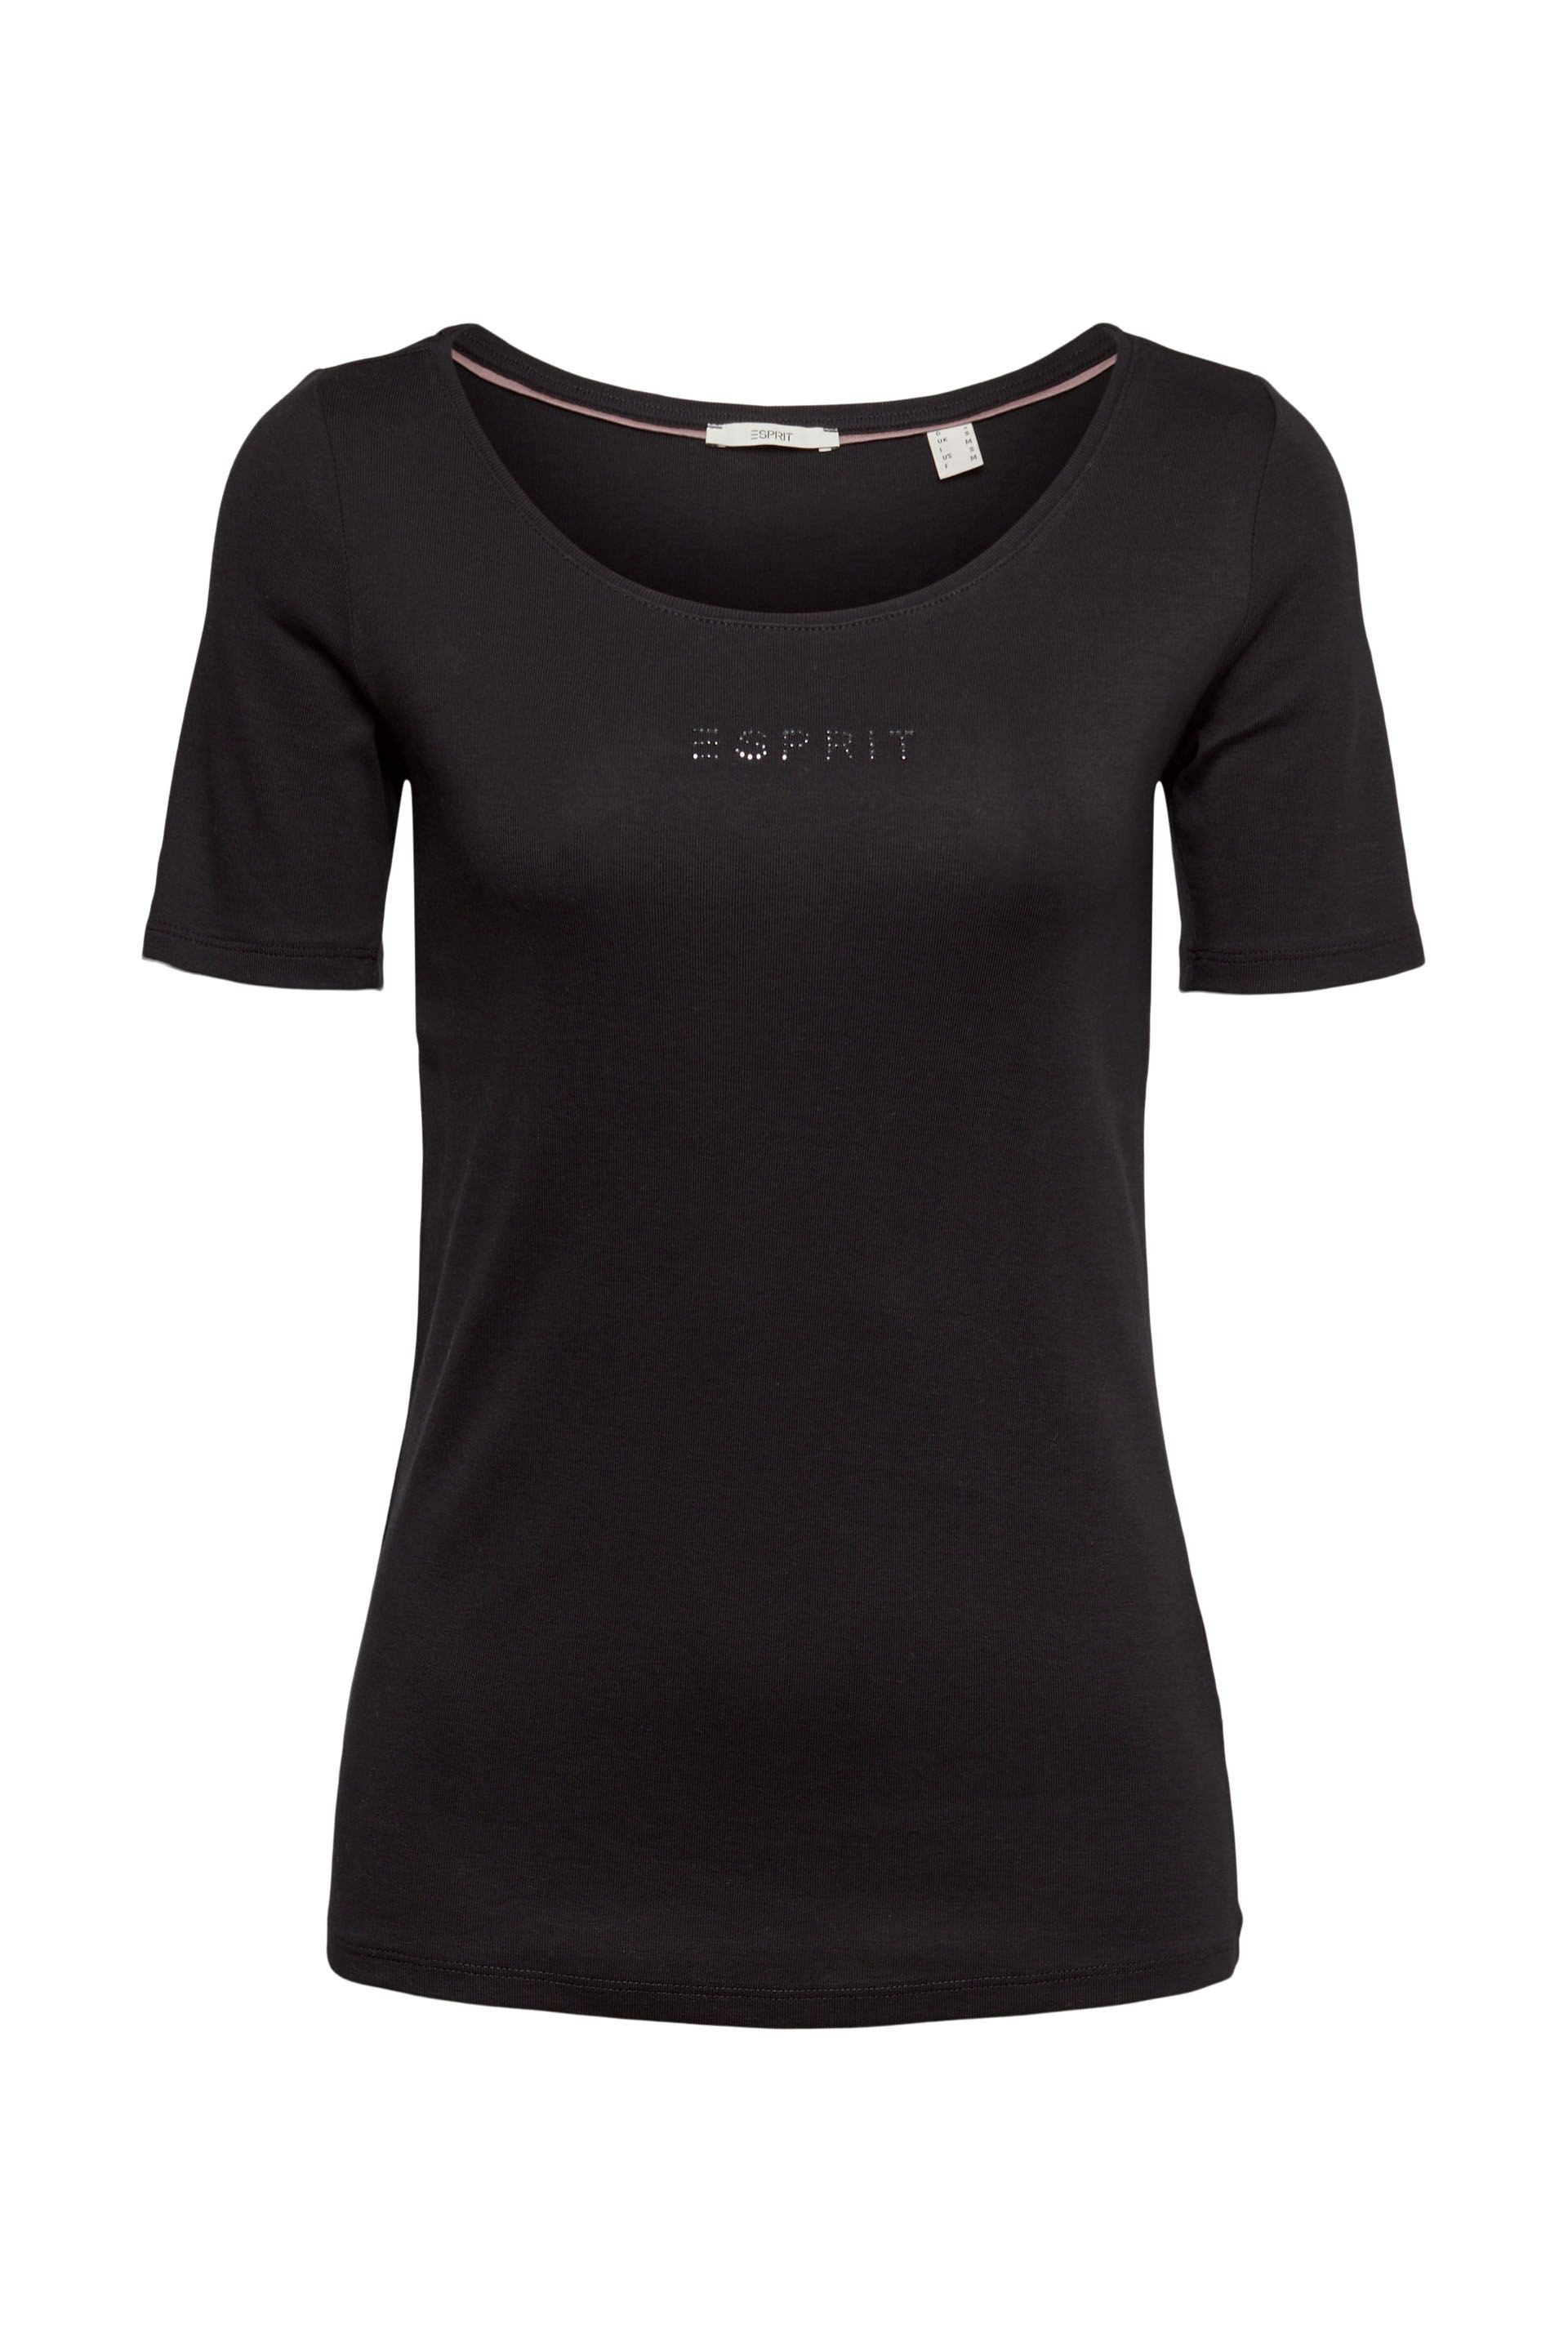 Esprit - Cotton logo T-shirt, Black, large image number 0